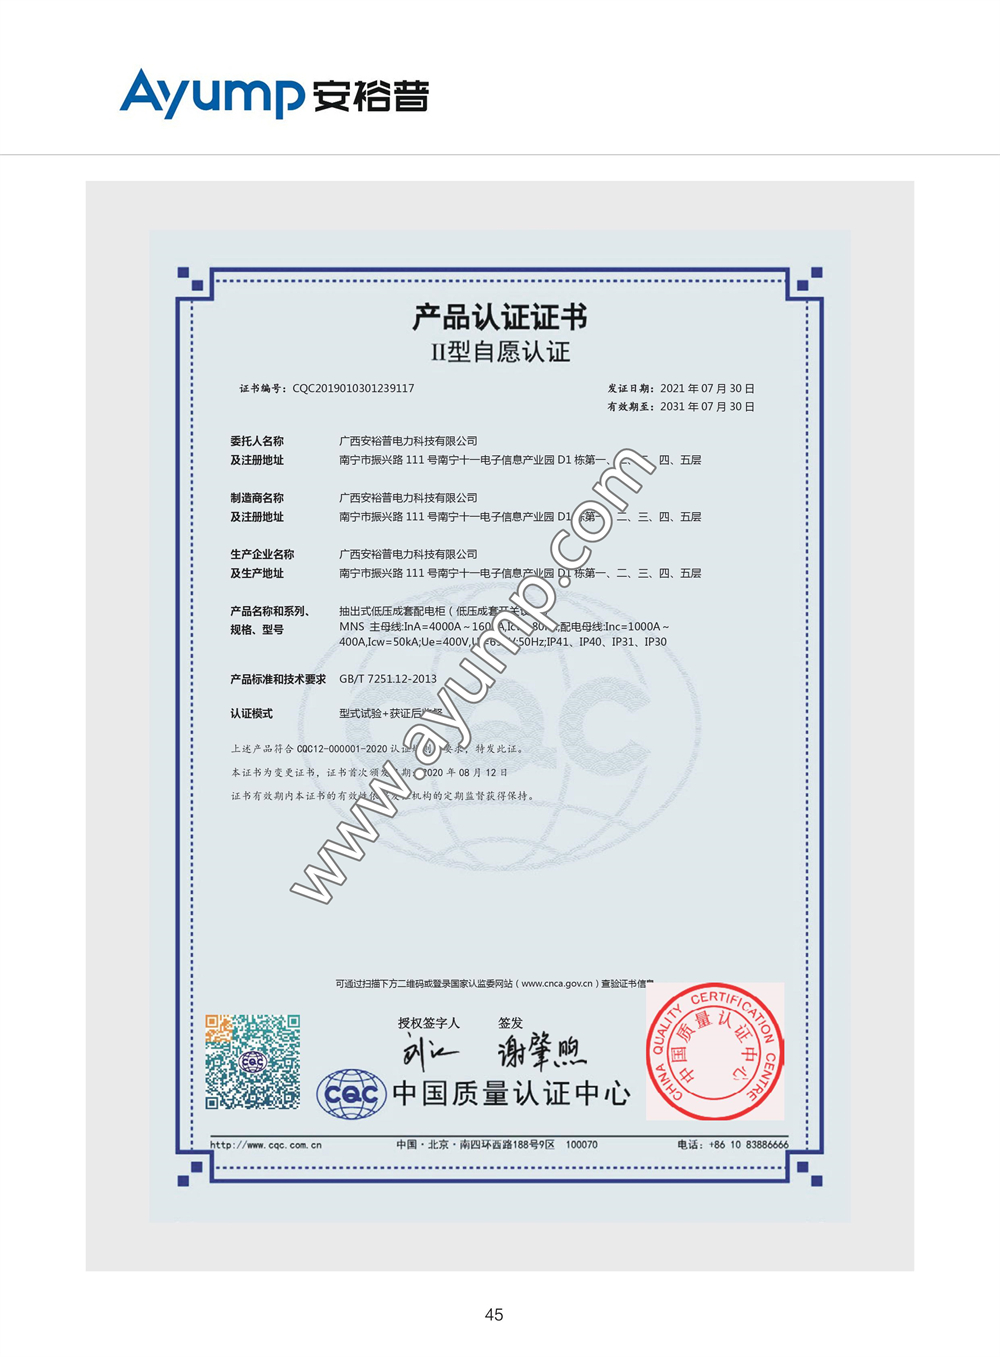 MNS抽出式低壓成套配電柜國家強制性產品認證證書Ⅱ型自愿認證